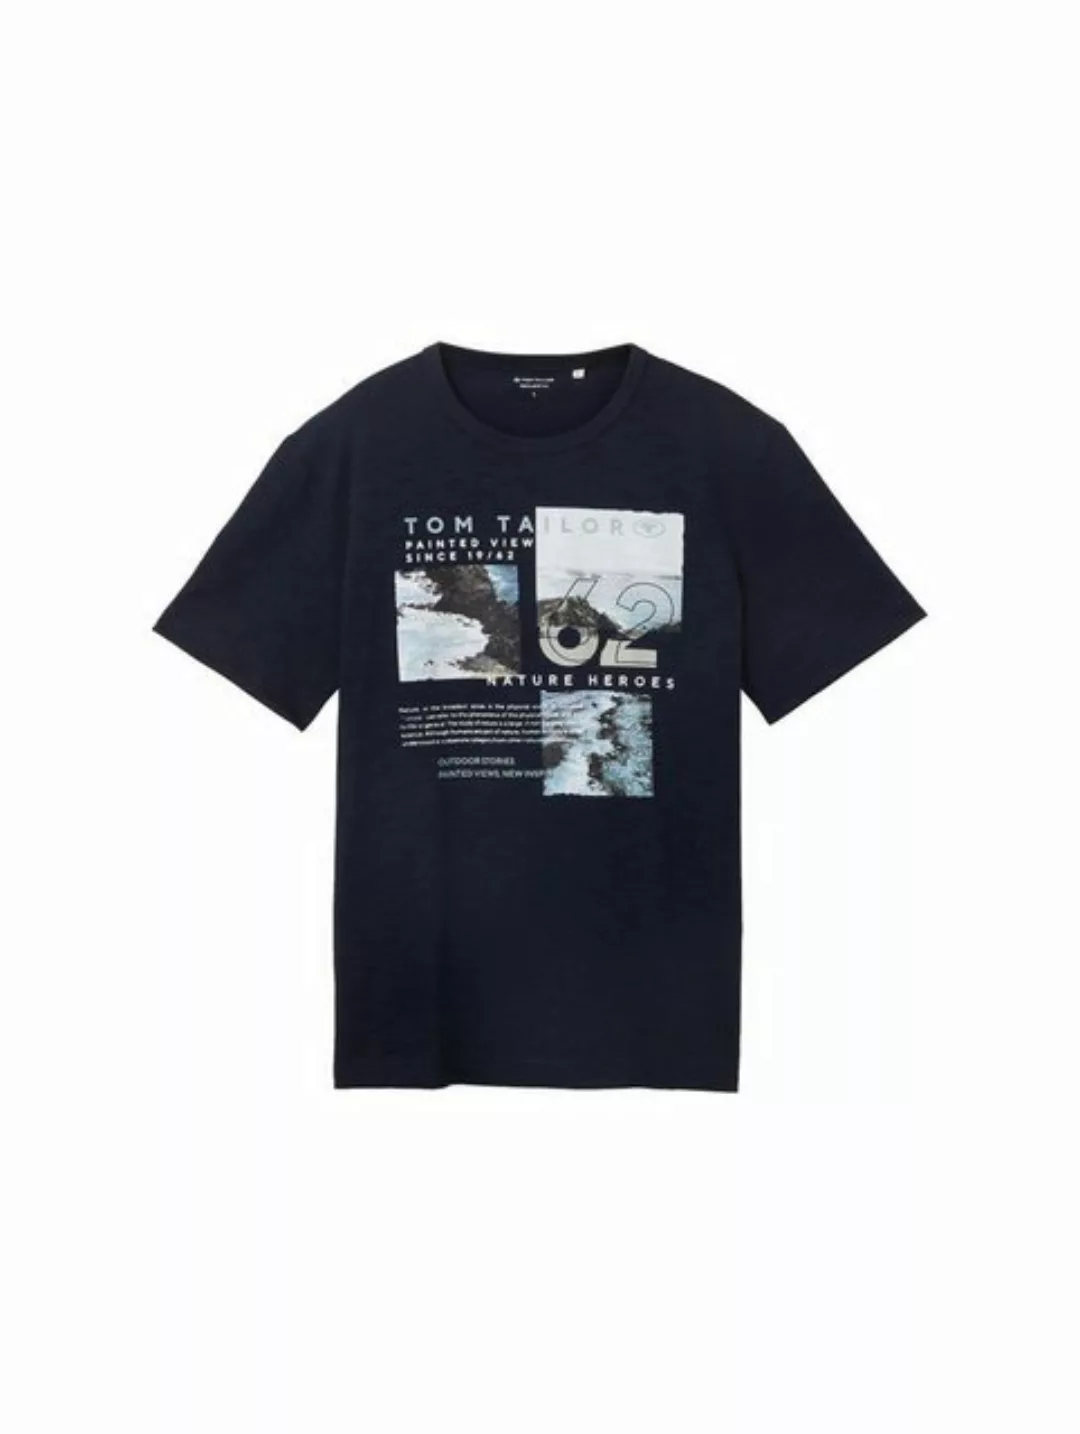 TOM TAILOR T-Shirt photo print t-shirt günstig online kaufen